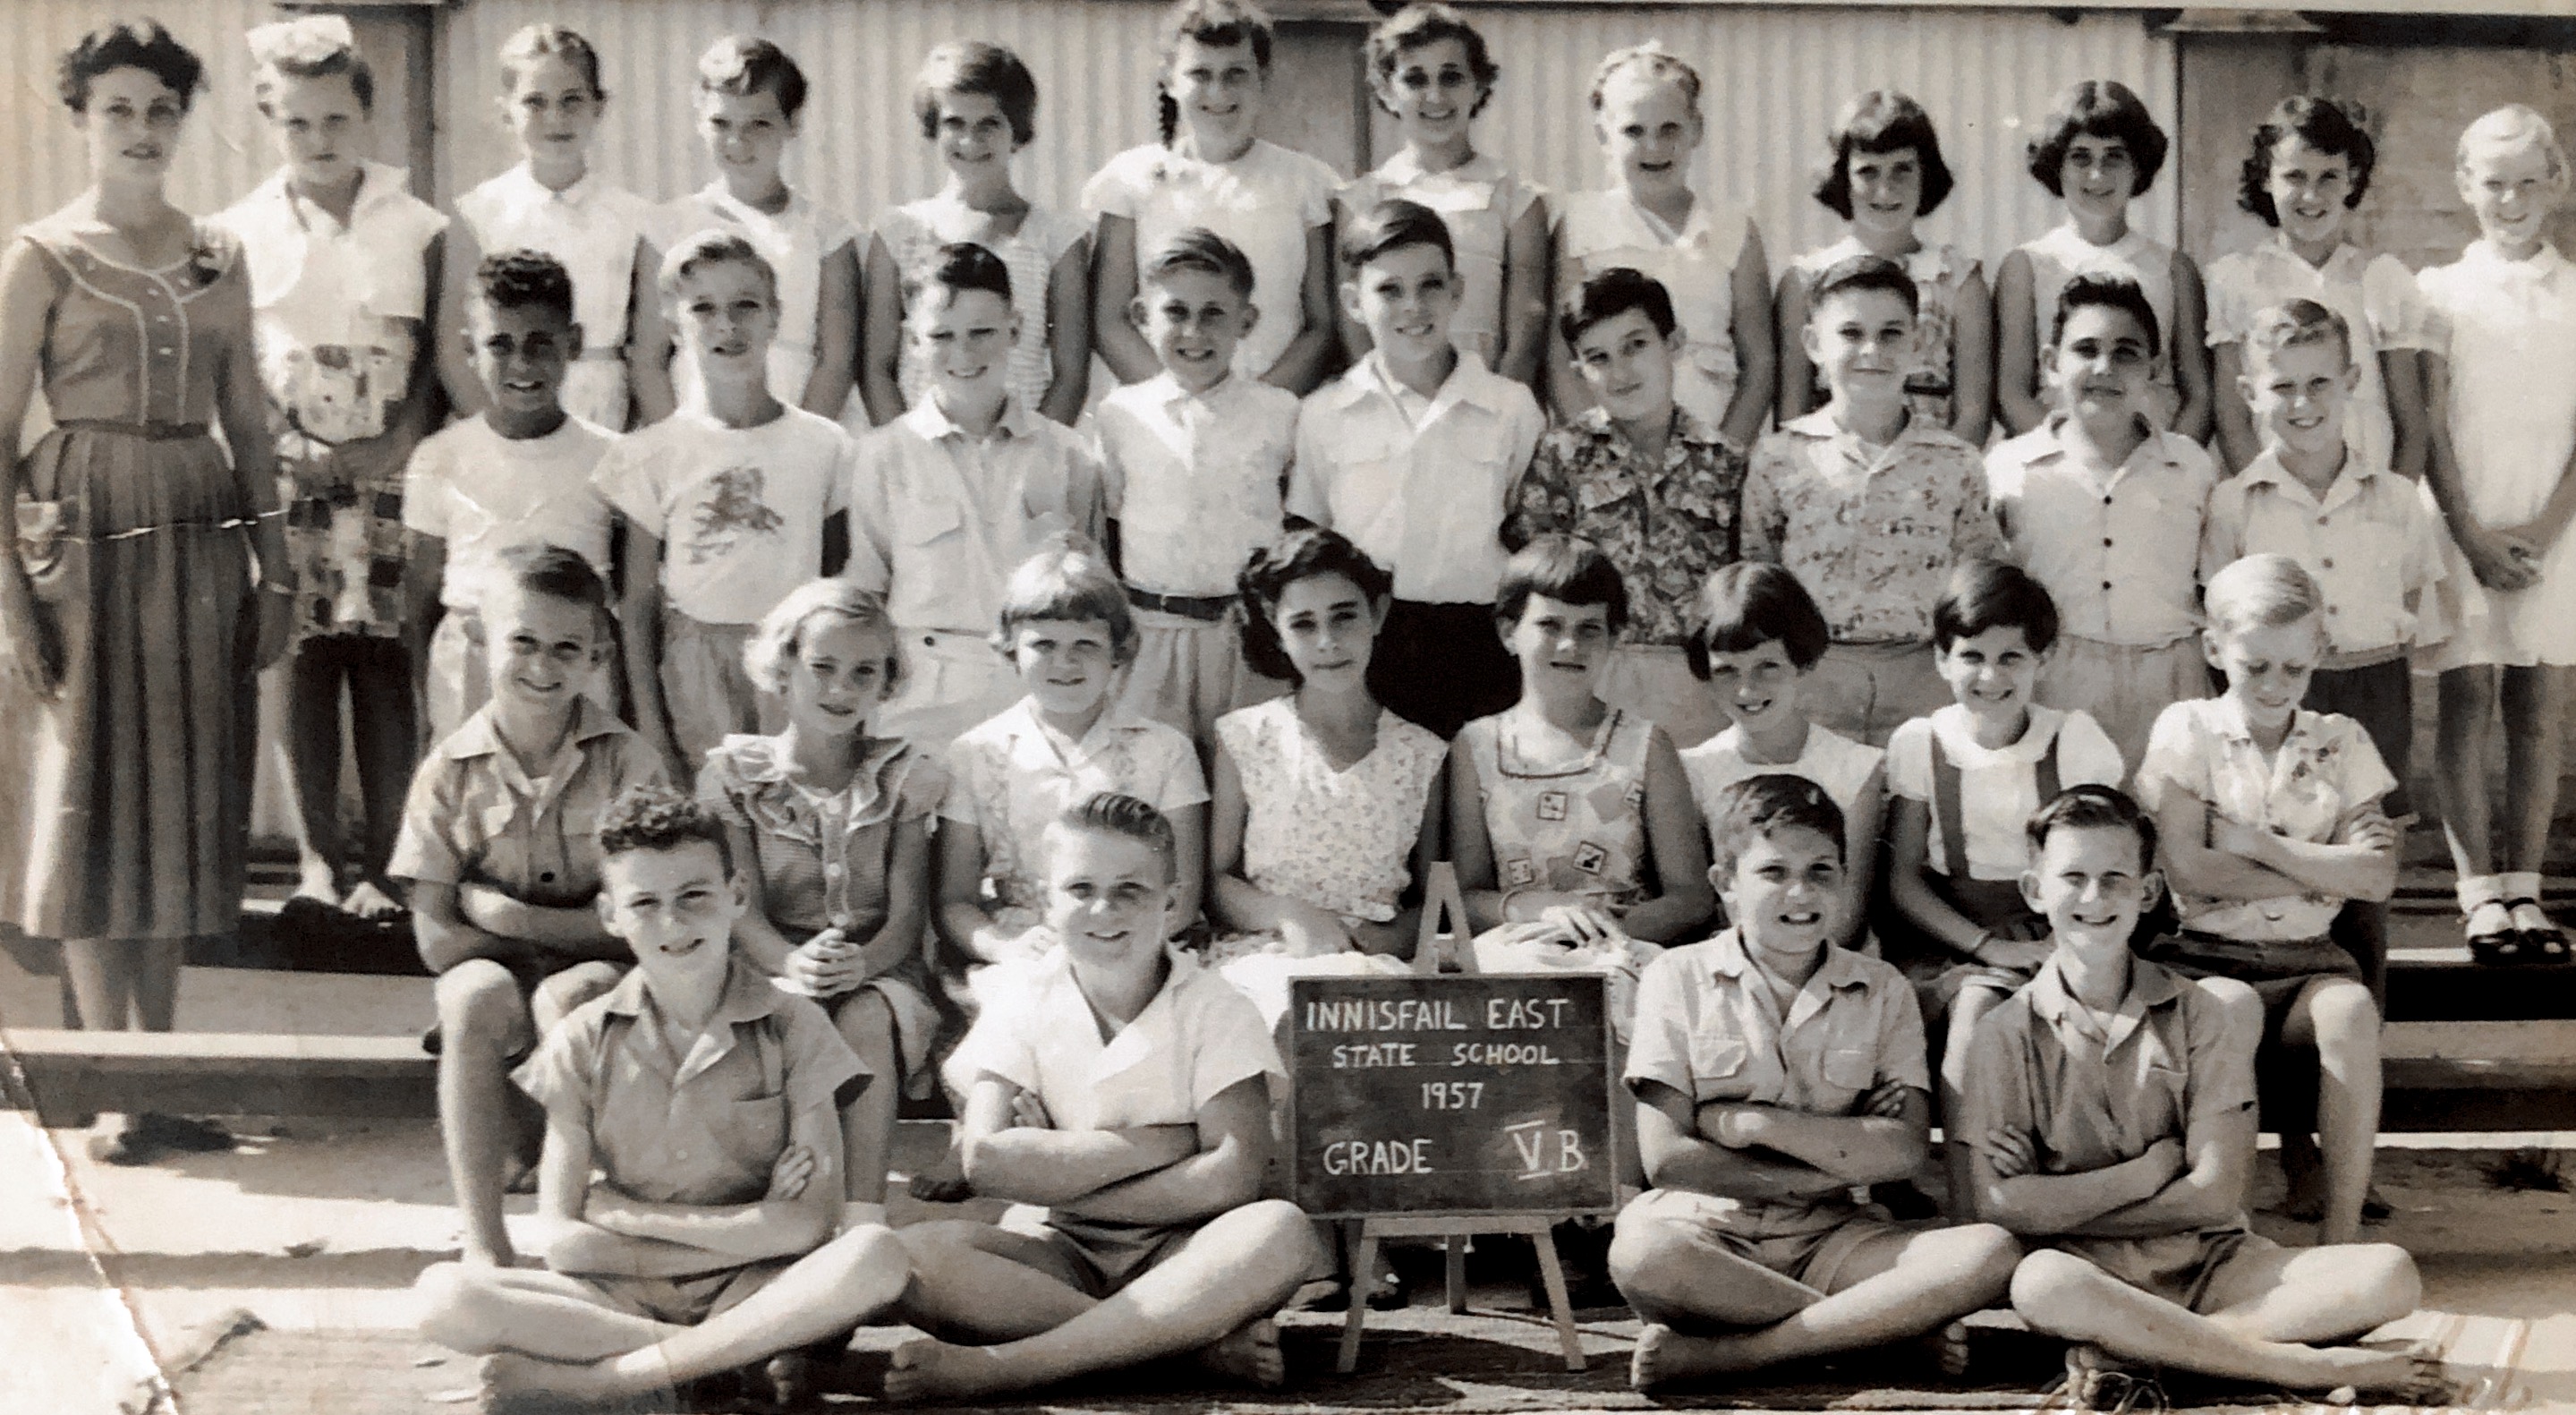 Innisfail East Primary School 1957 - Class 5B INNISFAIL EAST-STATE SCHOOL 1957-GRADE Studios